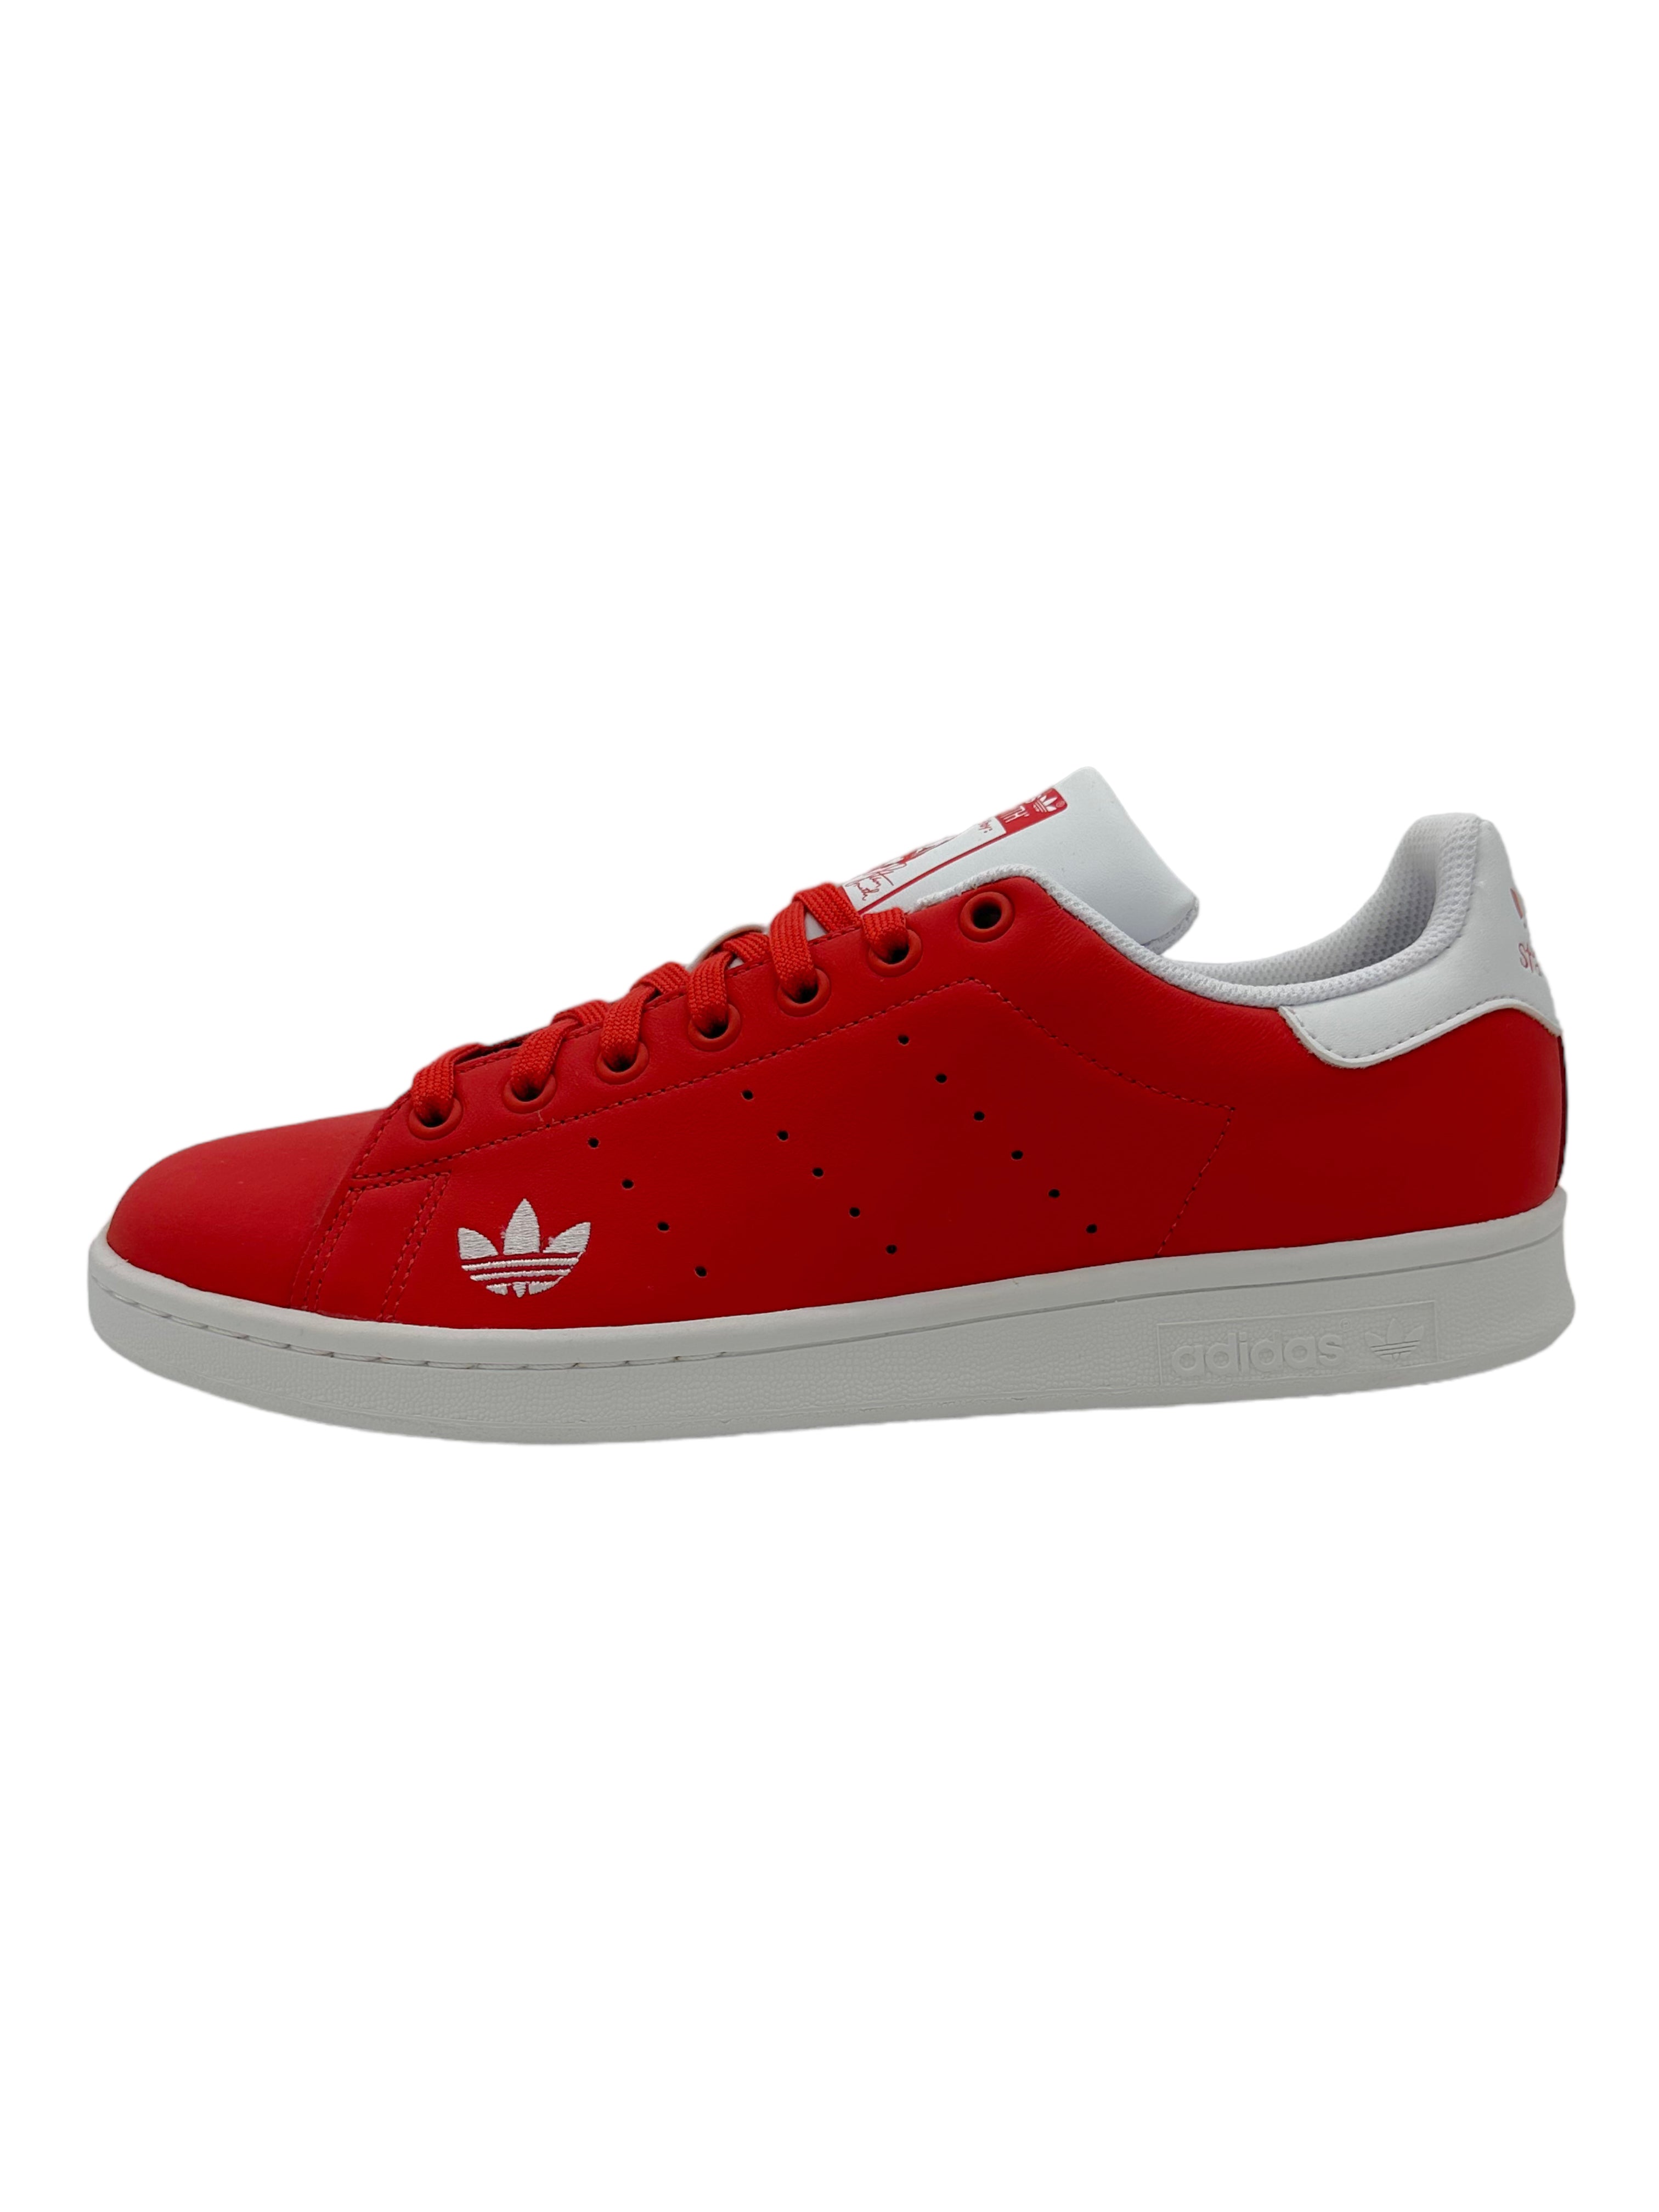 Adidas Stan Smith Red & White Sneakers – Genuine Design Luxury